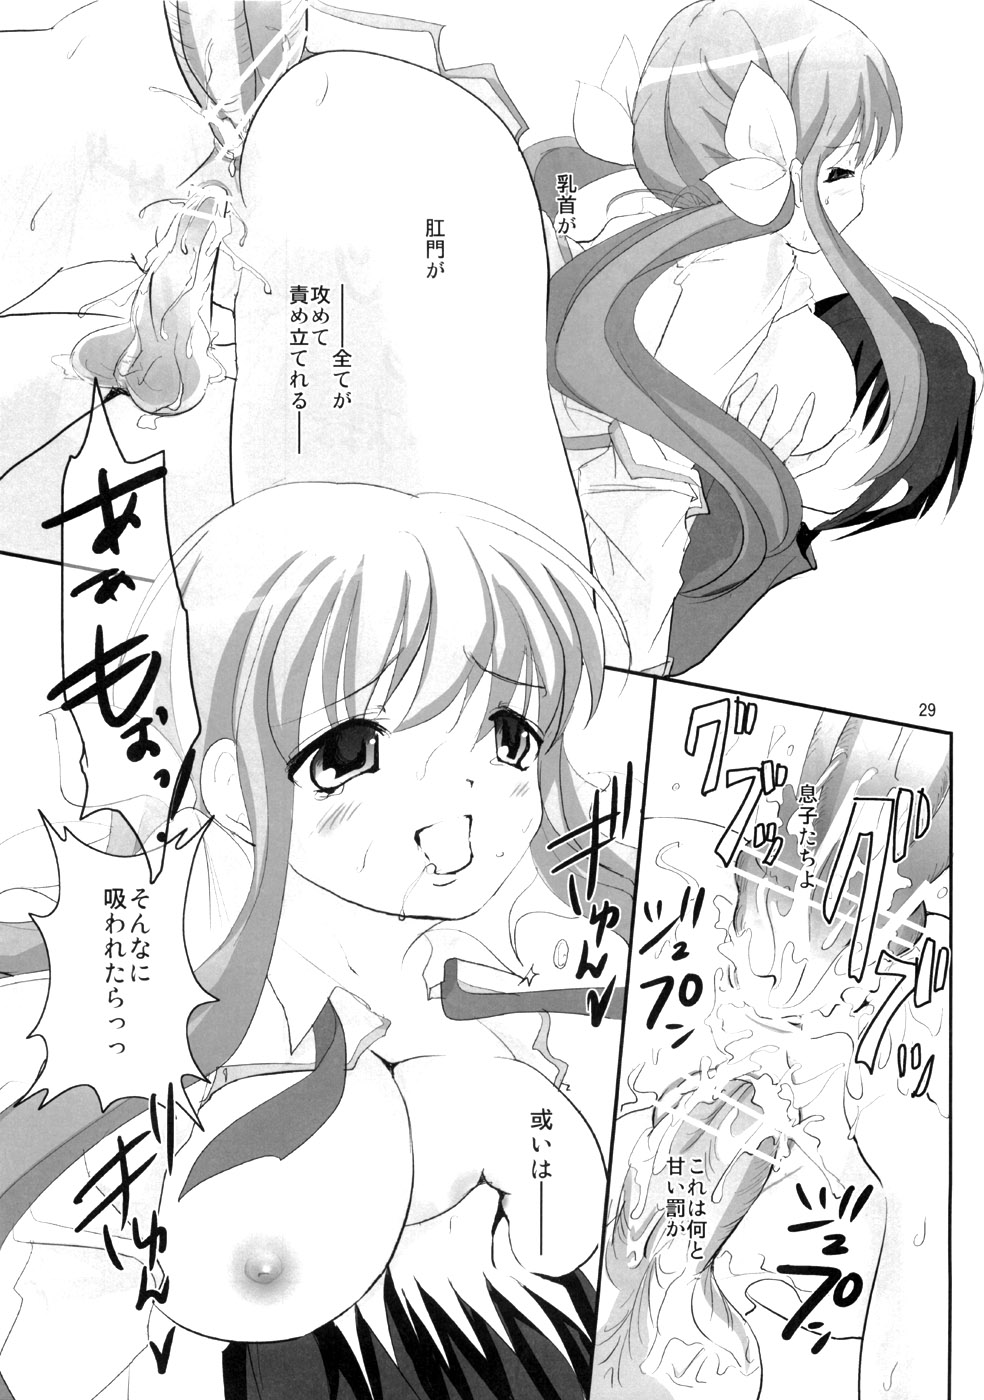 Read C72 Fumikan Natsume Fumika Kawamukiki Code Geass Hentai